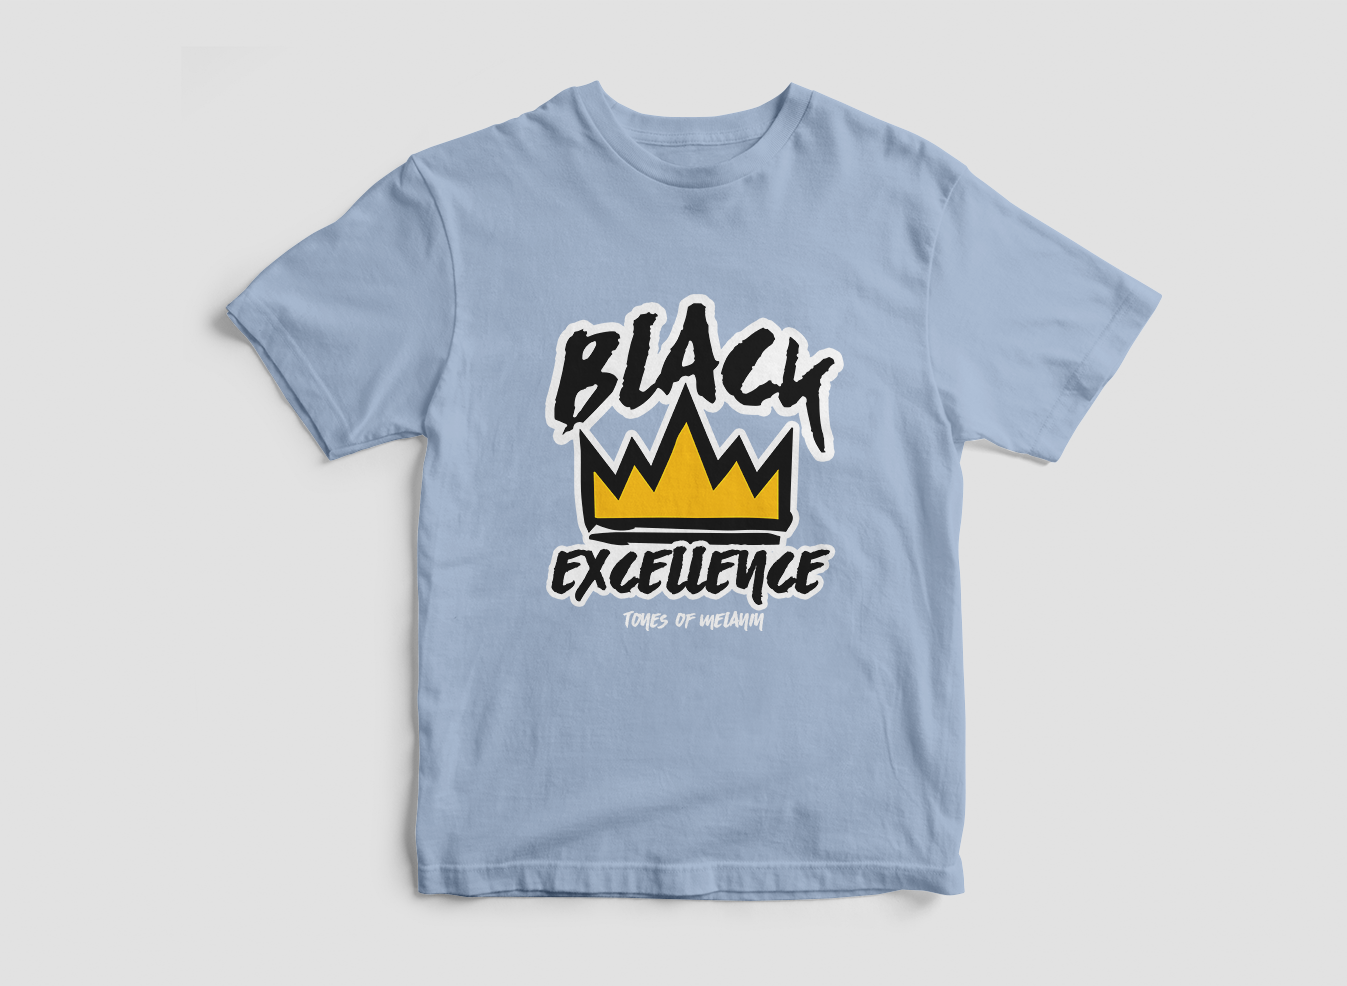 NEW Light Blue Black Excellence T-Shirt